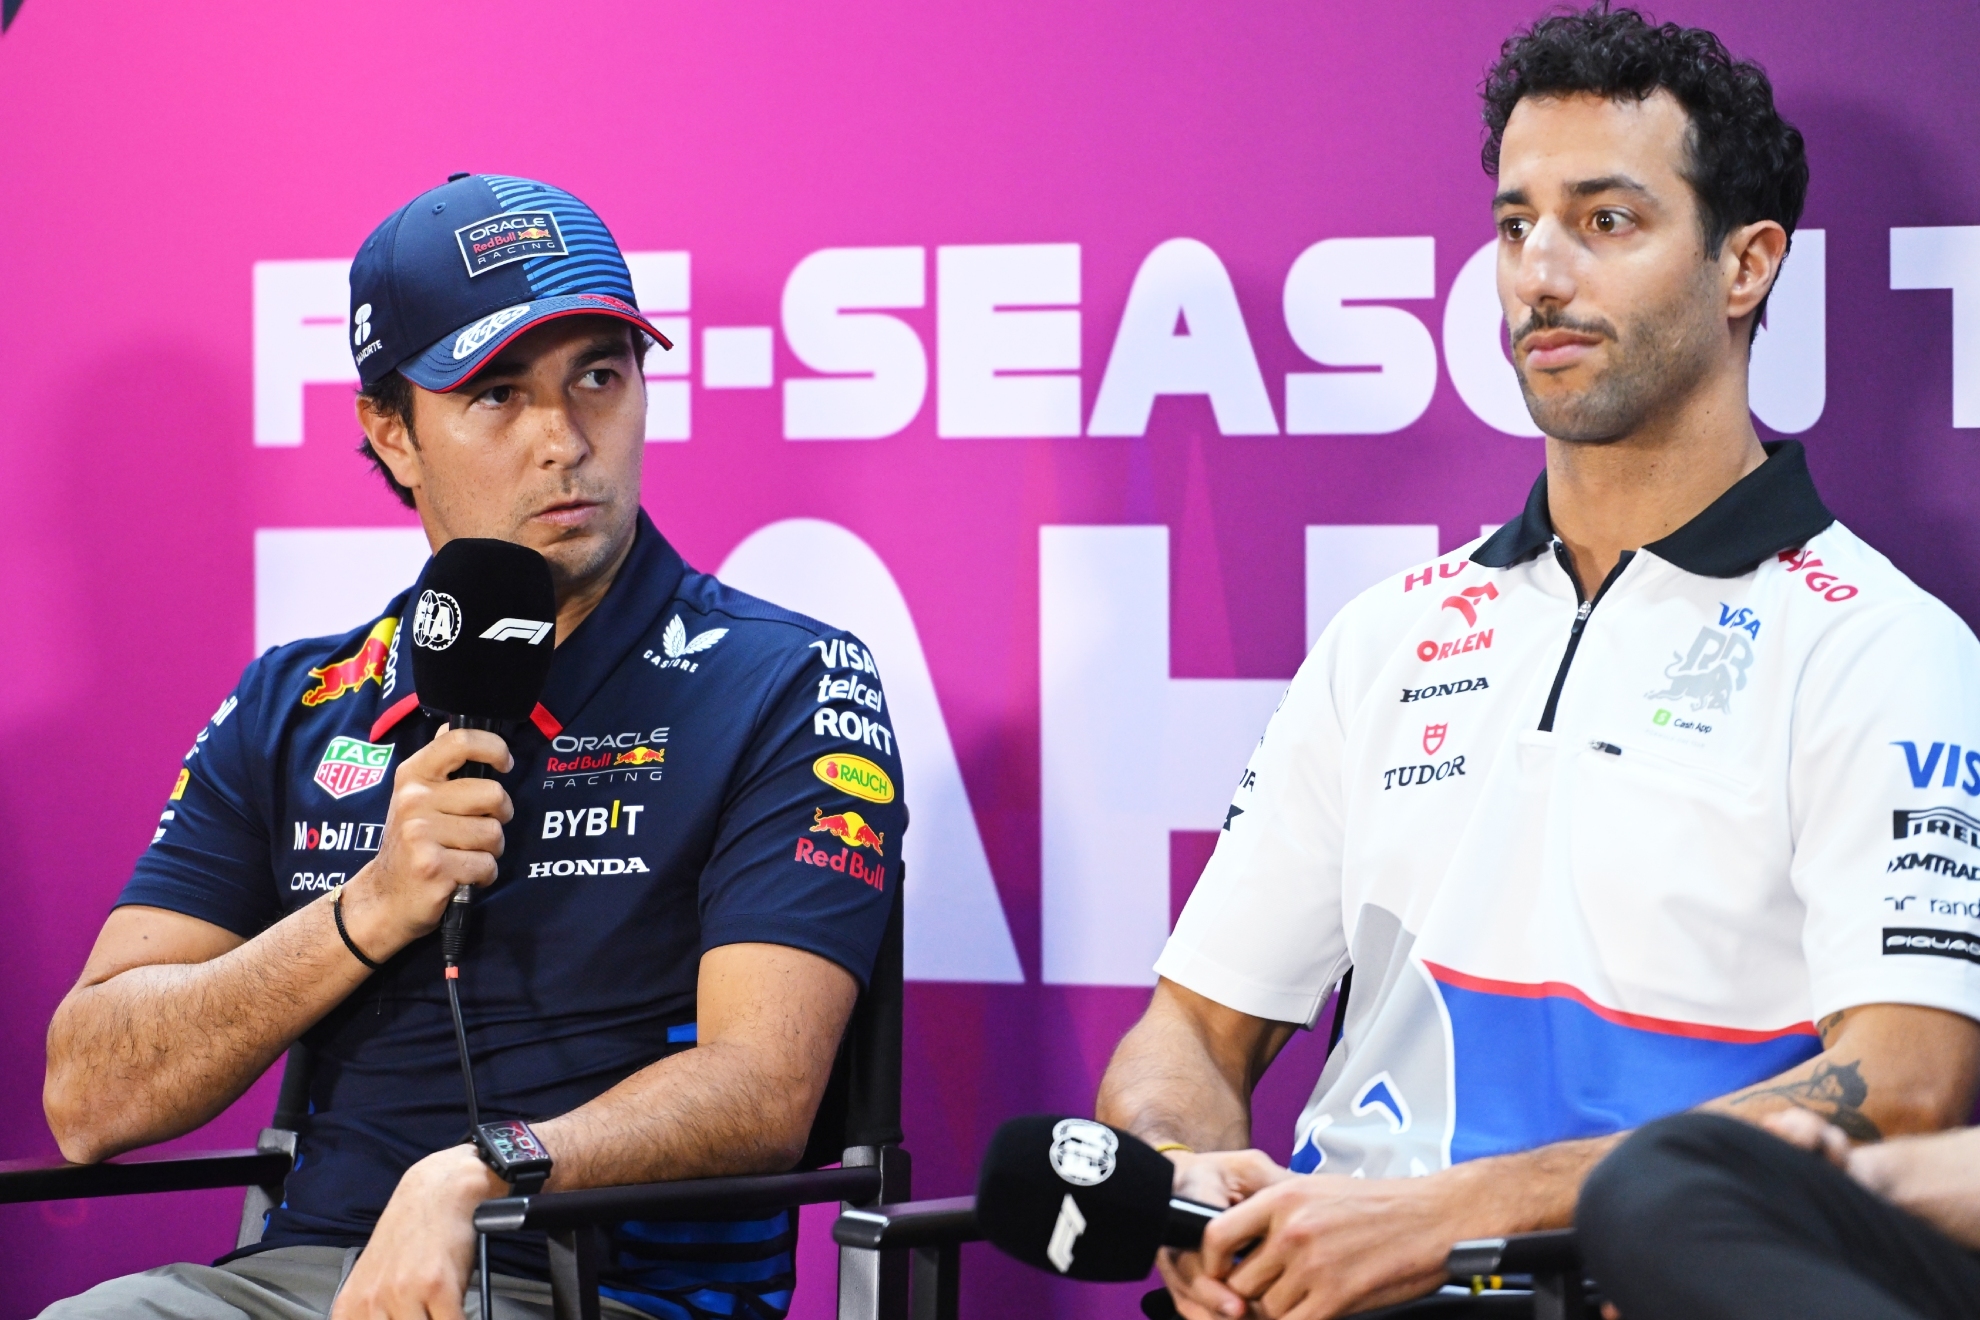 Checo Prez speaks at a press conference with Ricciardo beside him